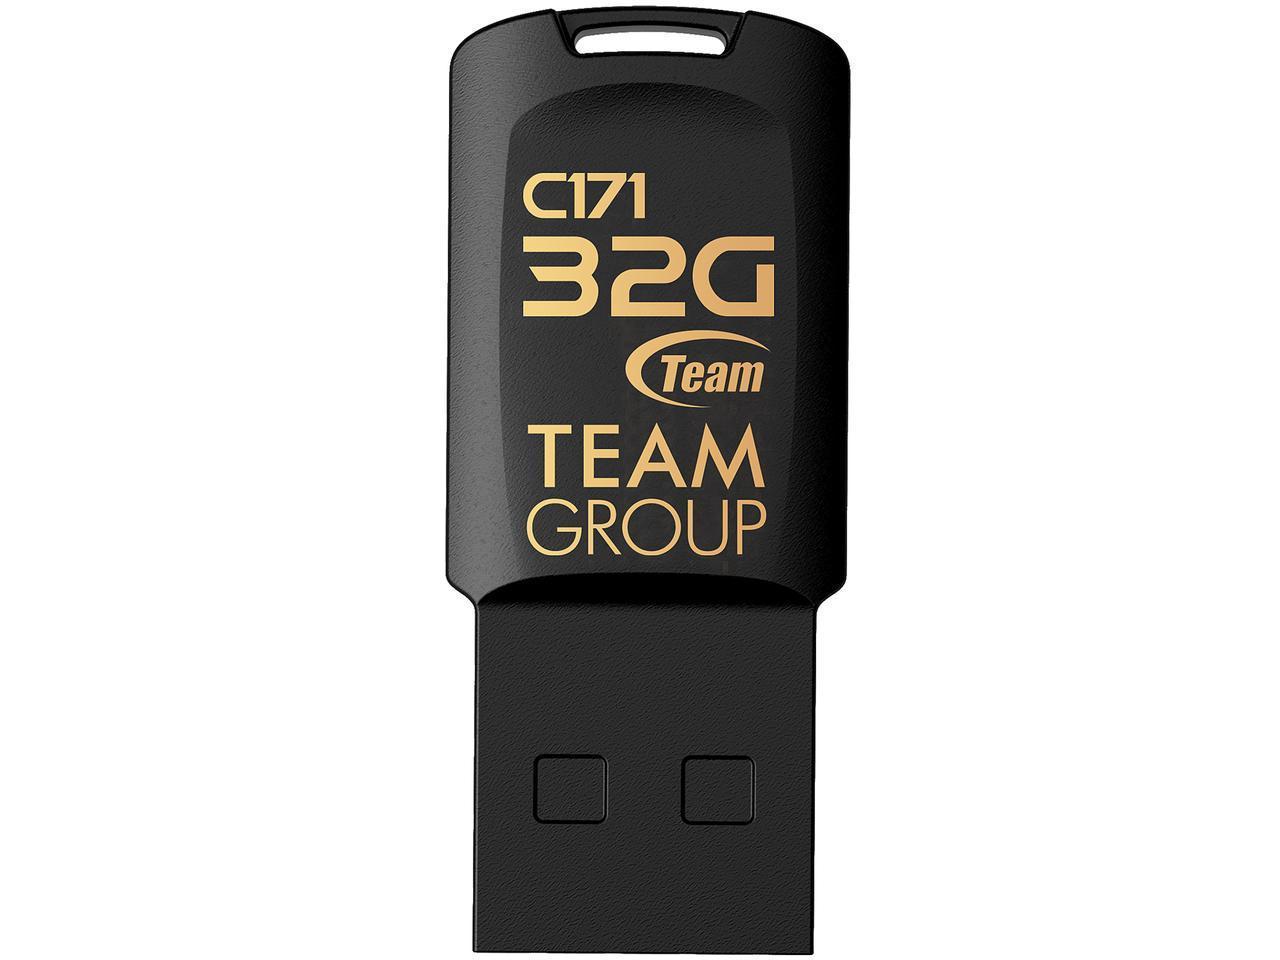 USB памет Team Group C171 32GB USB 2.0, Черен